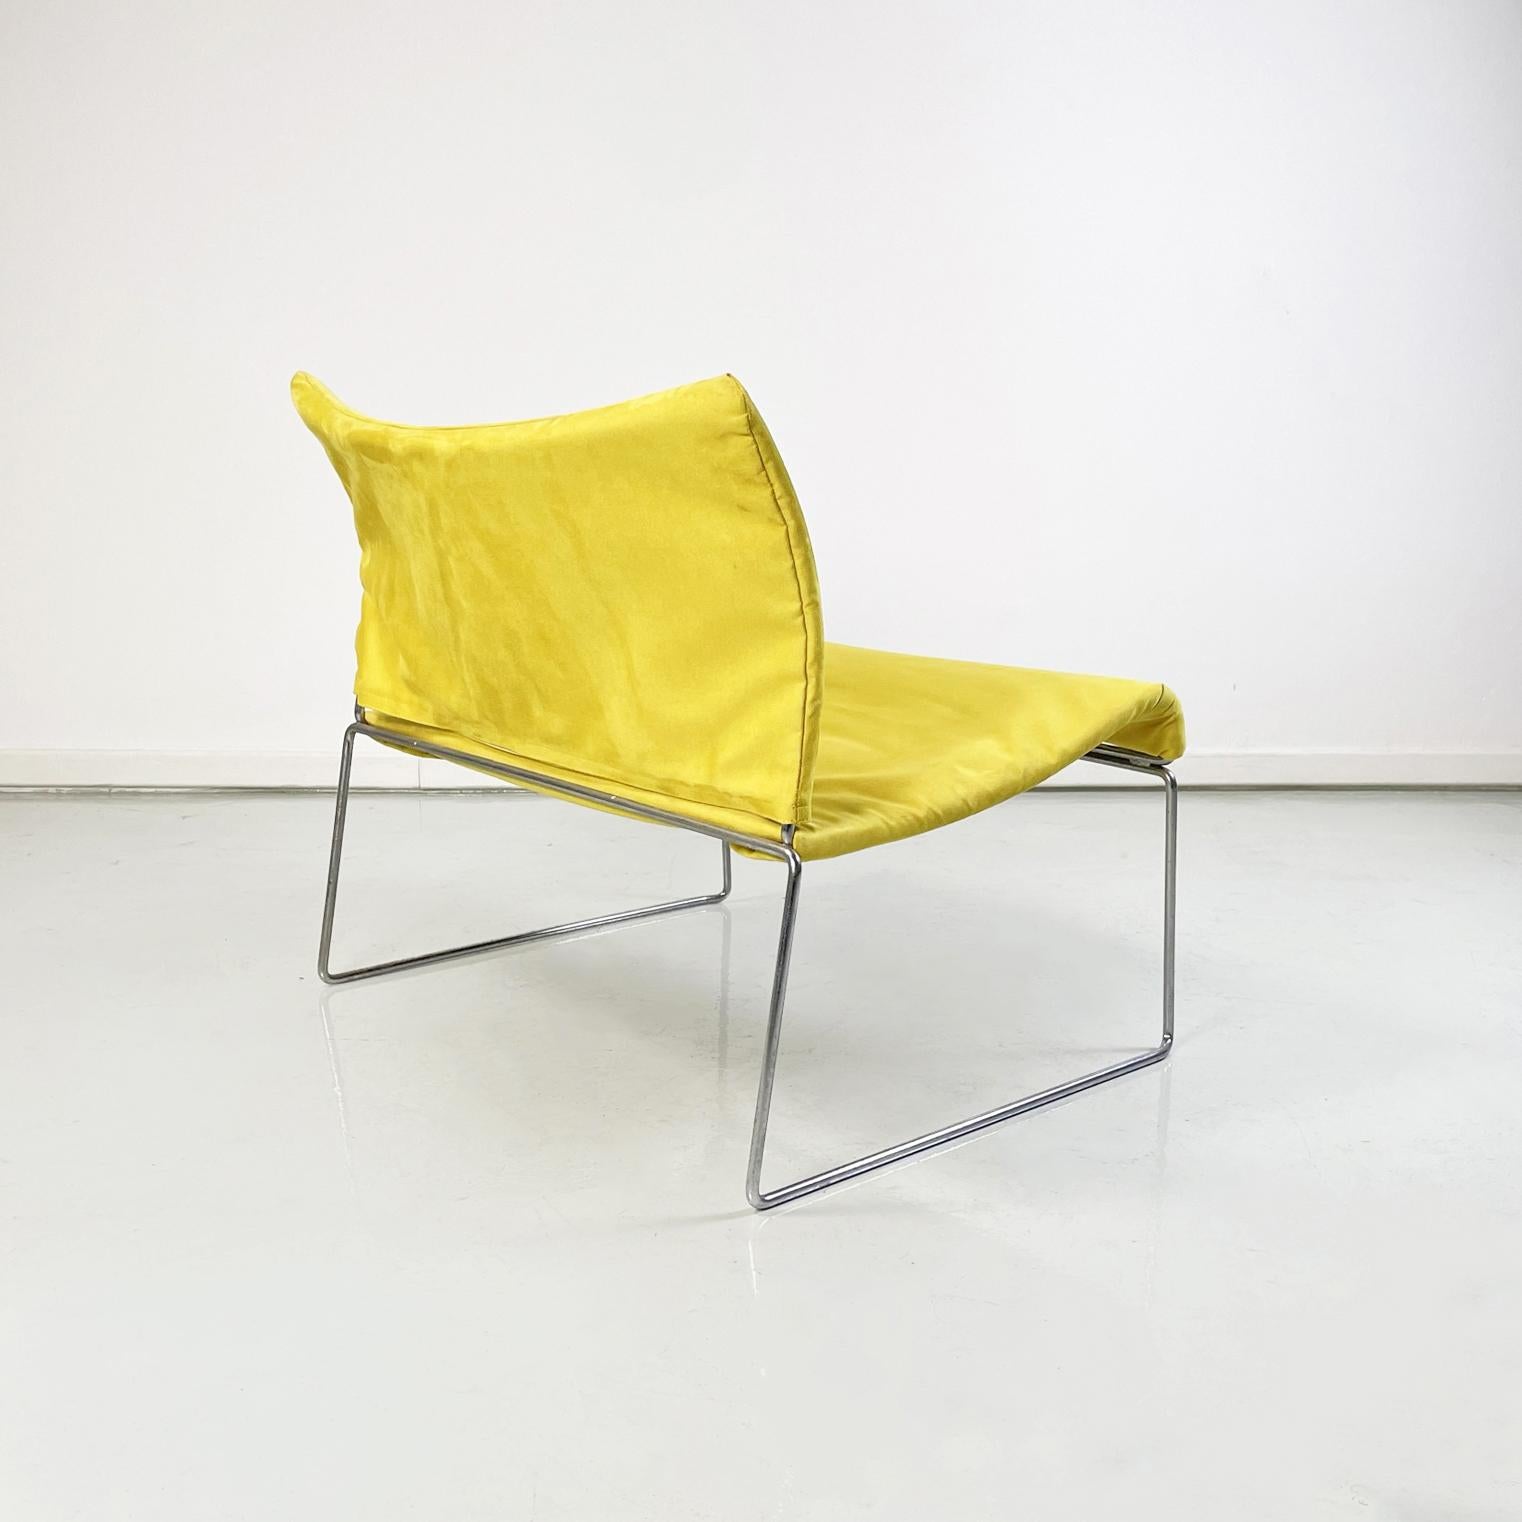 Late 20th Century Italian Modern Yellow Armchair Mod, Saghi by Kazuhide Takahama for Gavina, 1970s For Sale